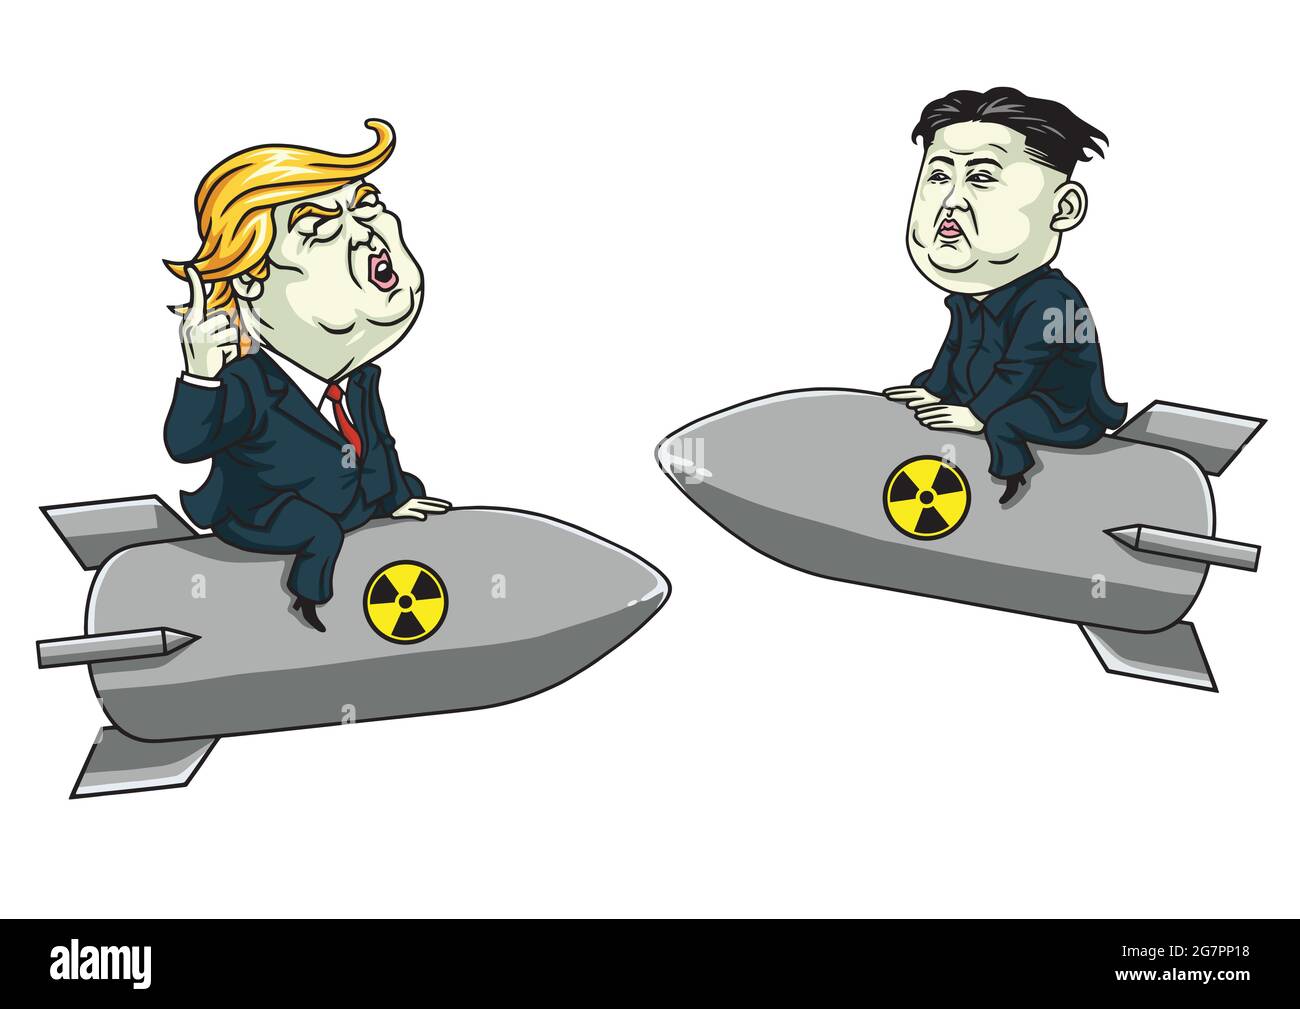 Donald Trump gegen Kim Jong-un über die Bedrohung durch Atomwaffen. Vektorgrafik Cartoon Illustration Stock Vektor